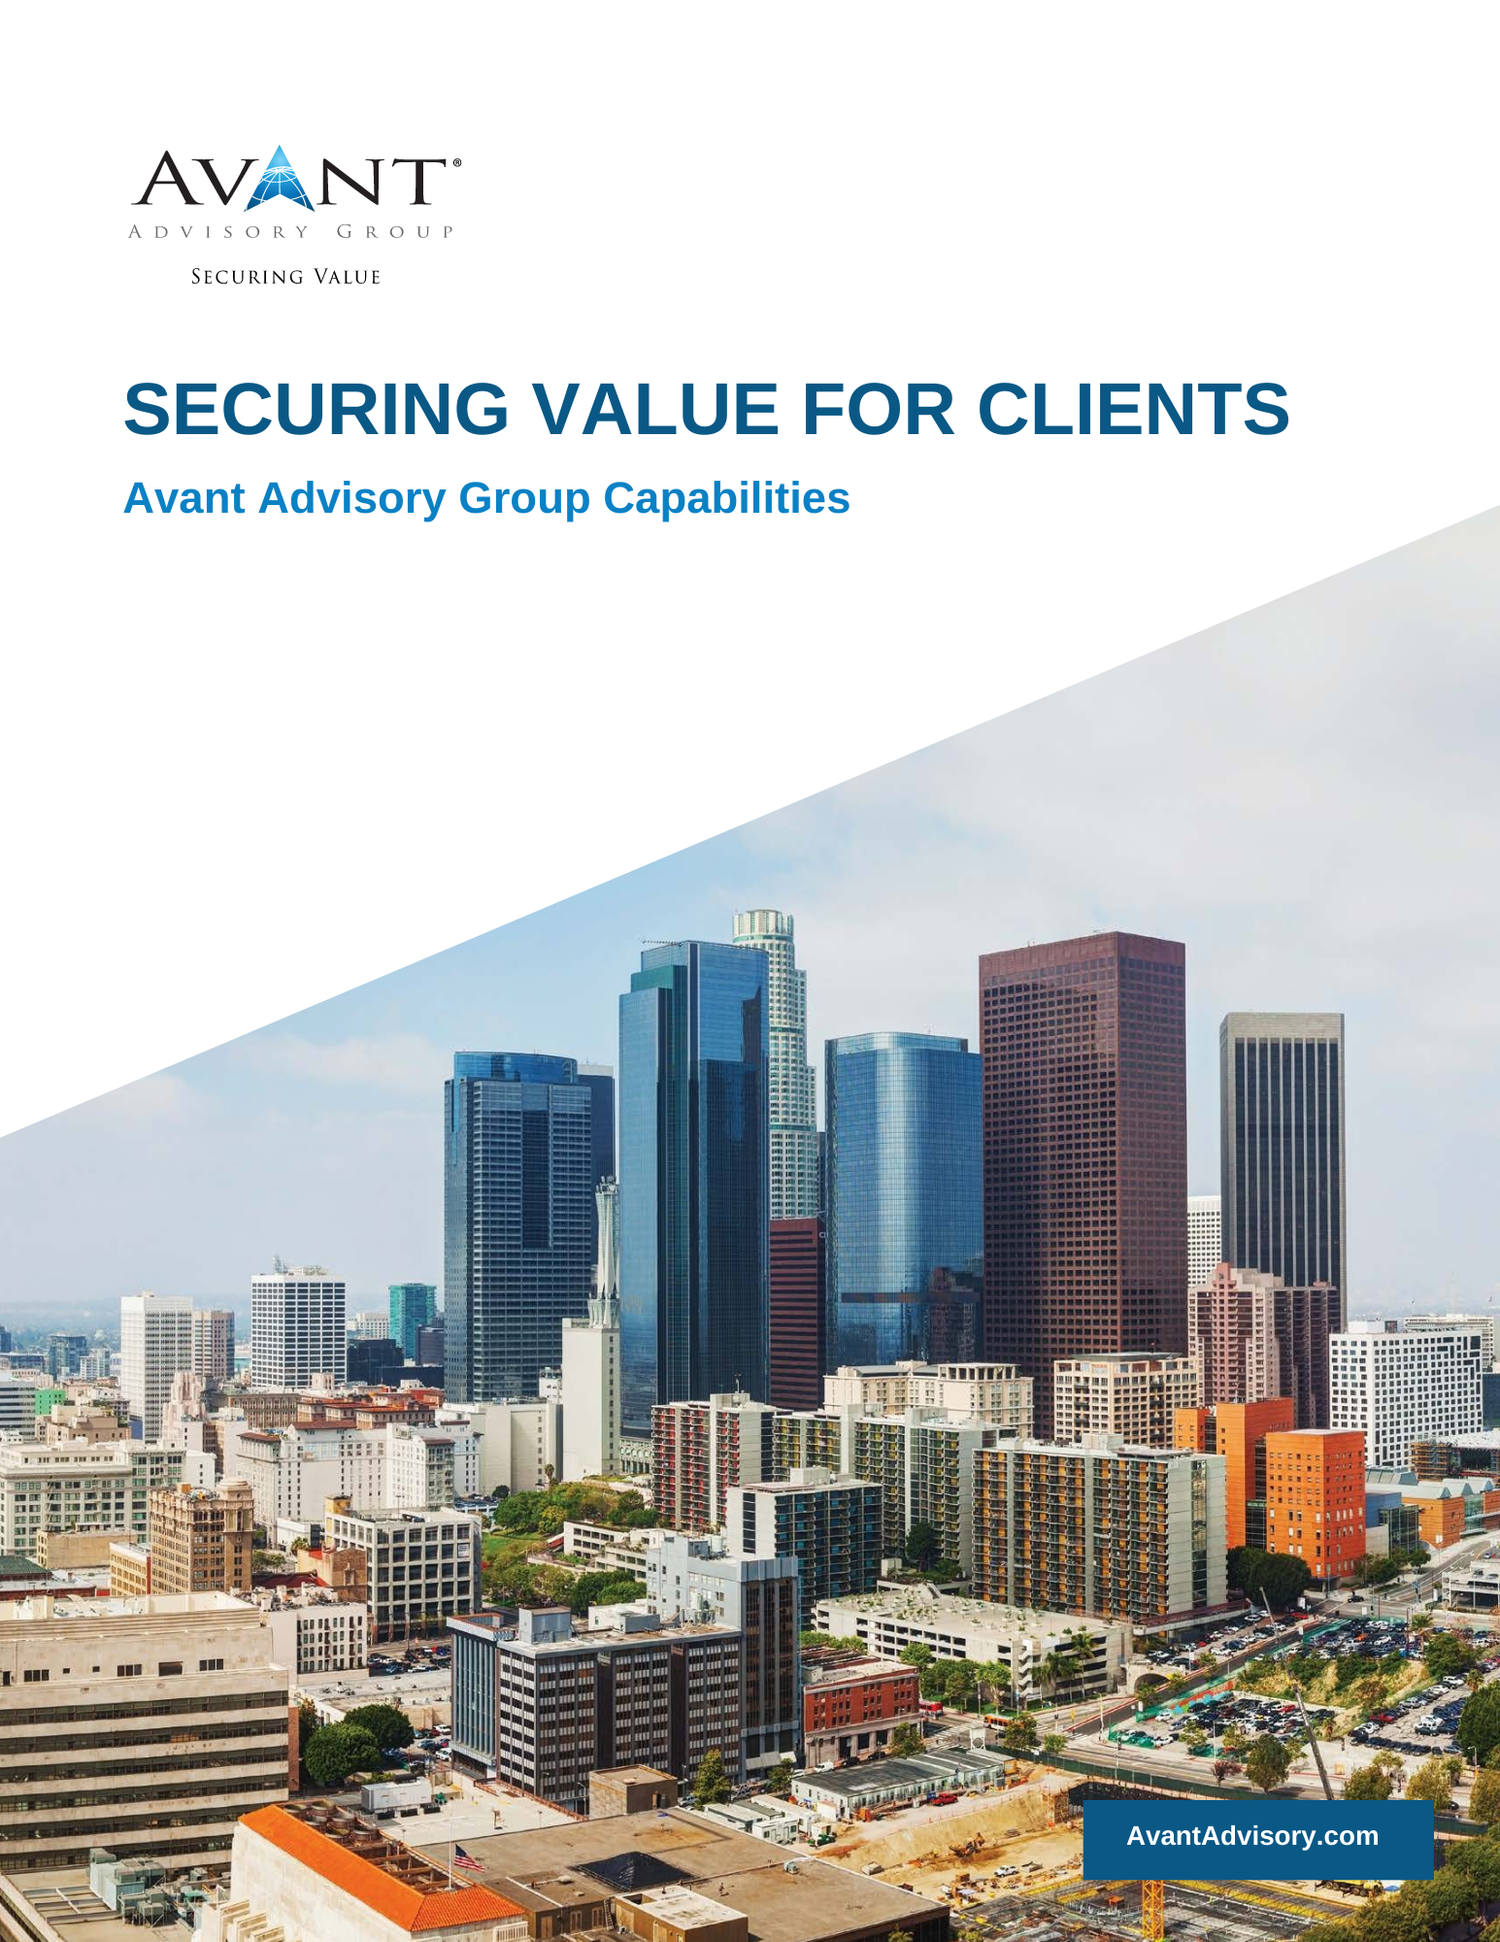 Avant Advisory Group Capabilities Booklet